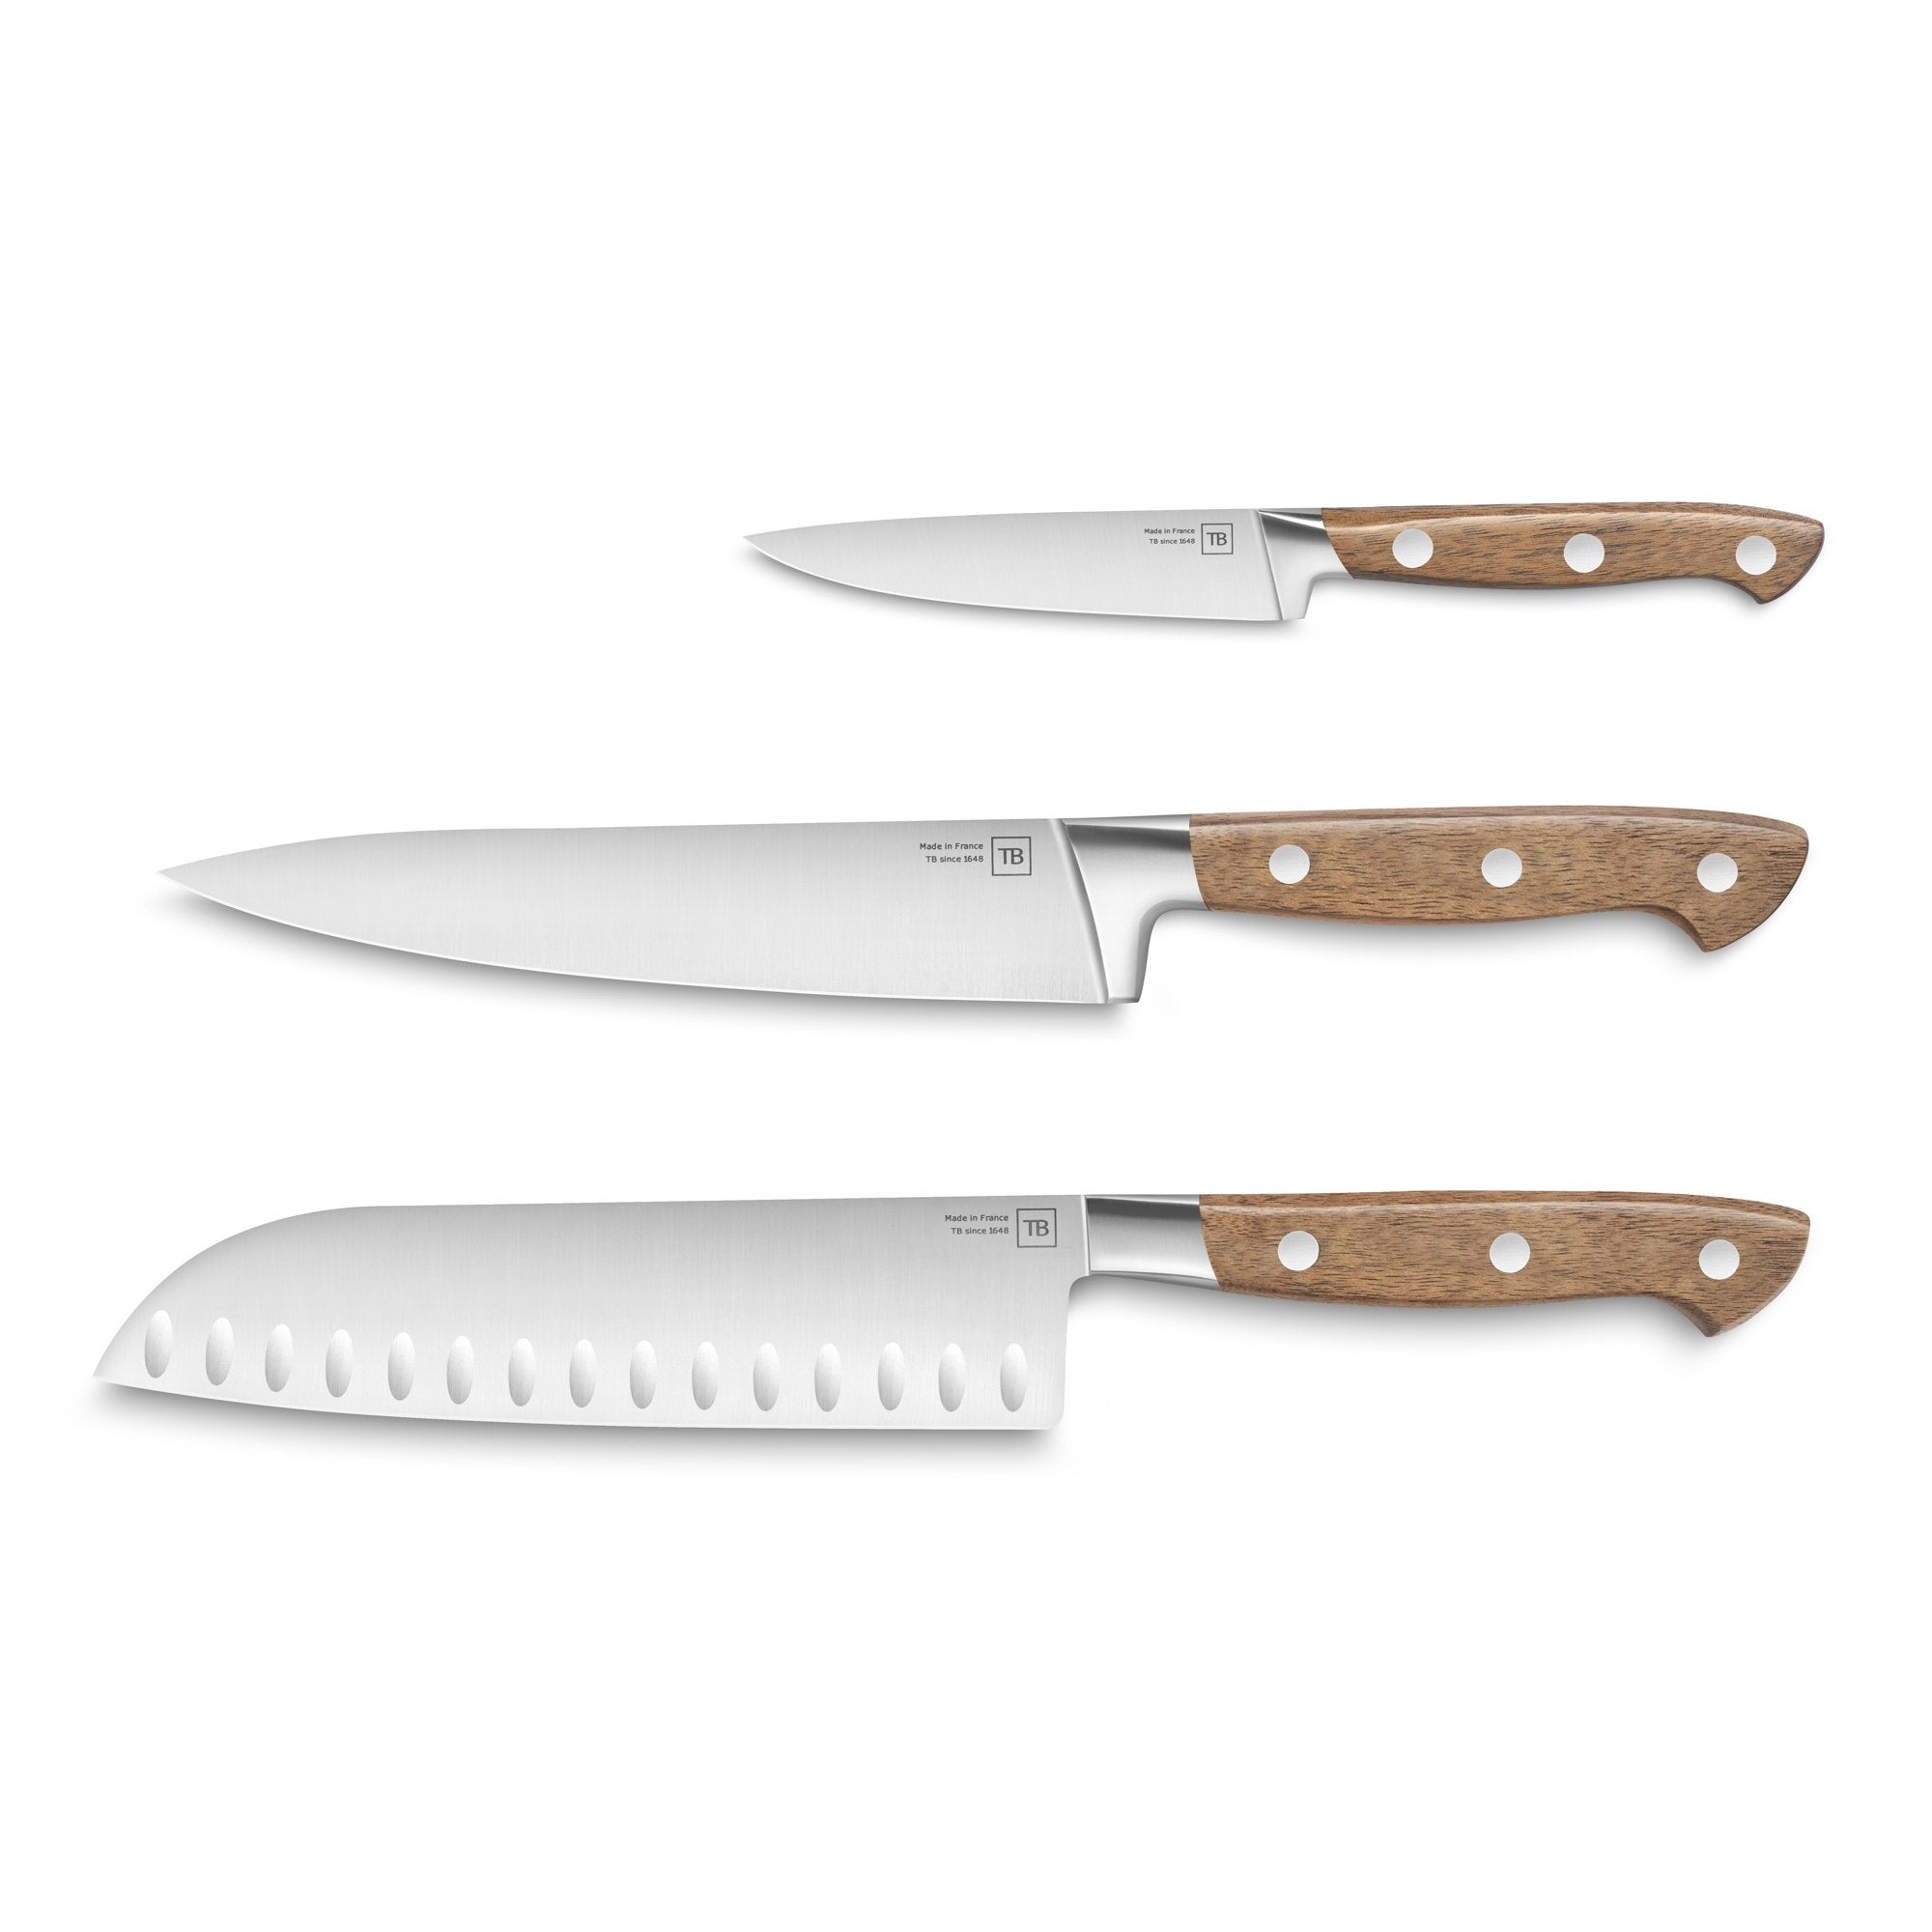 TB Tarrerias Bonjean - Georges - 3 Piece Kitchen Knife Set With Walnut Handles